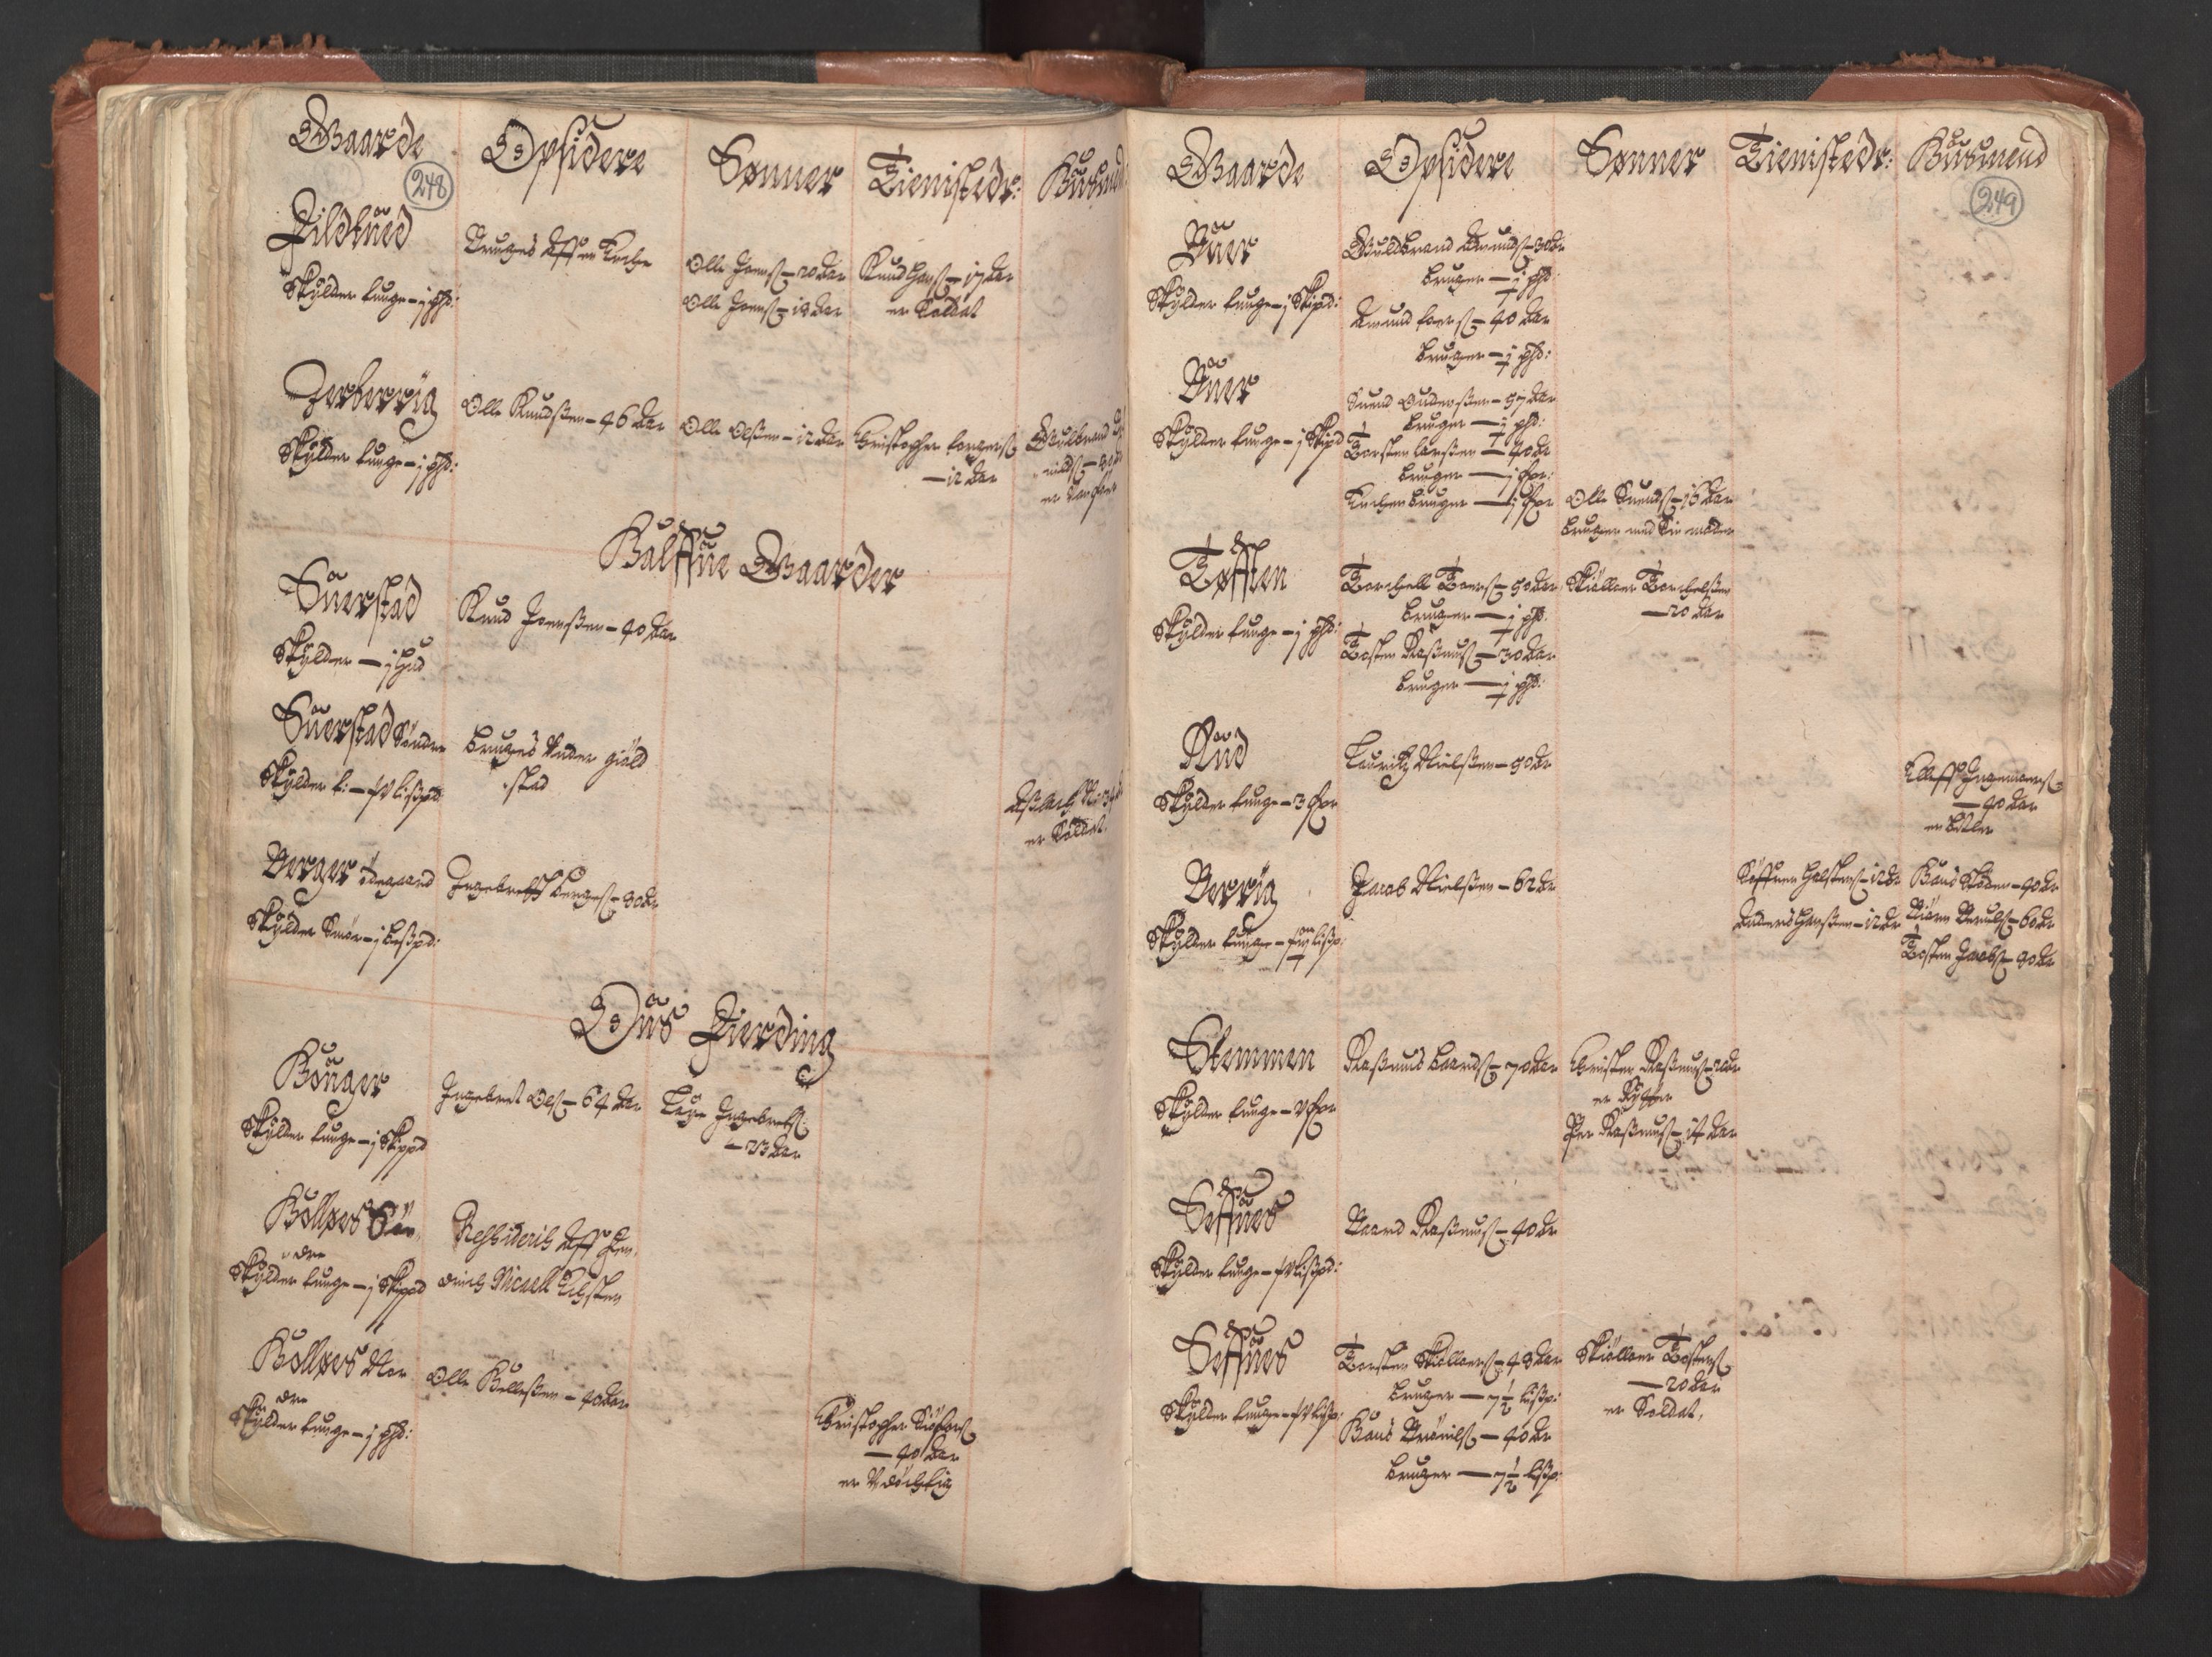 RA, Fogdenes og sorenskrivernes manntall 1664-1666, nr. 1: Fogderier (len og skipreider) i nåværende Østfold fylke, 1664, s. 248-249